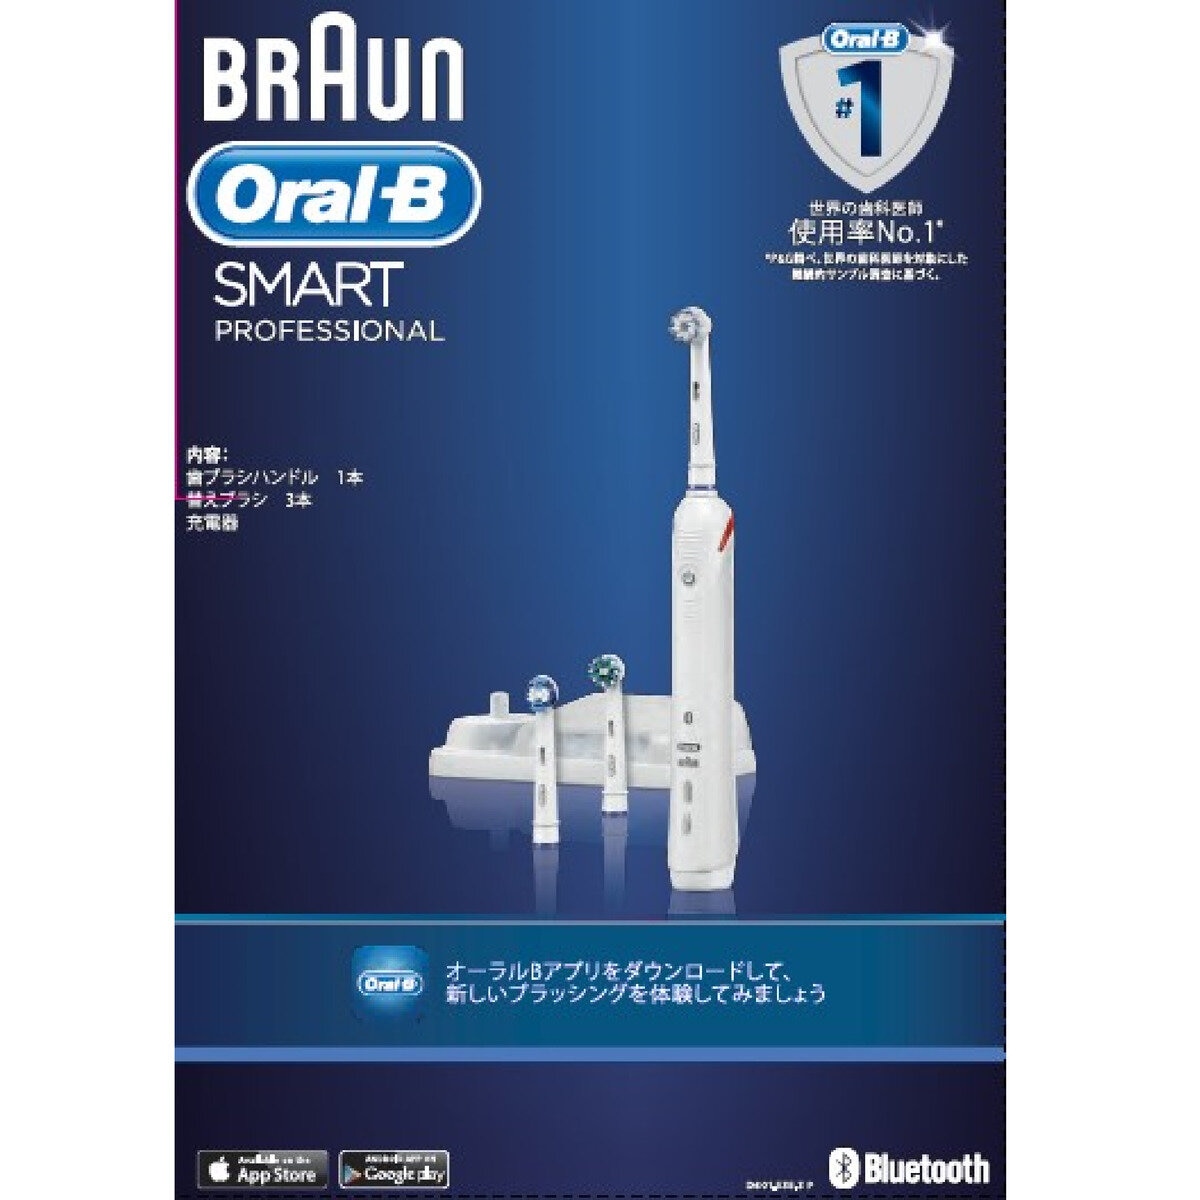 BRAUN oral-B smart series